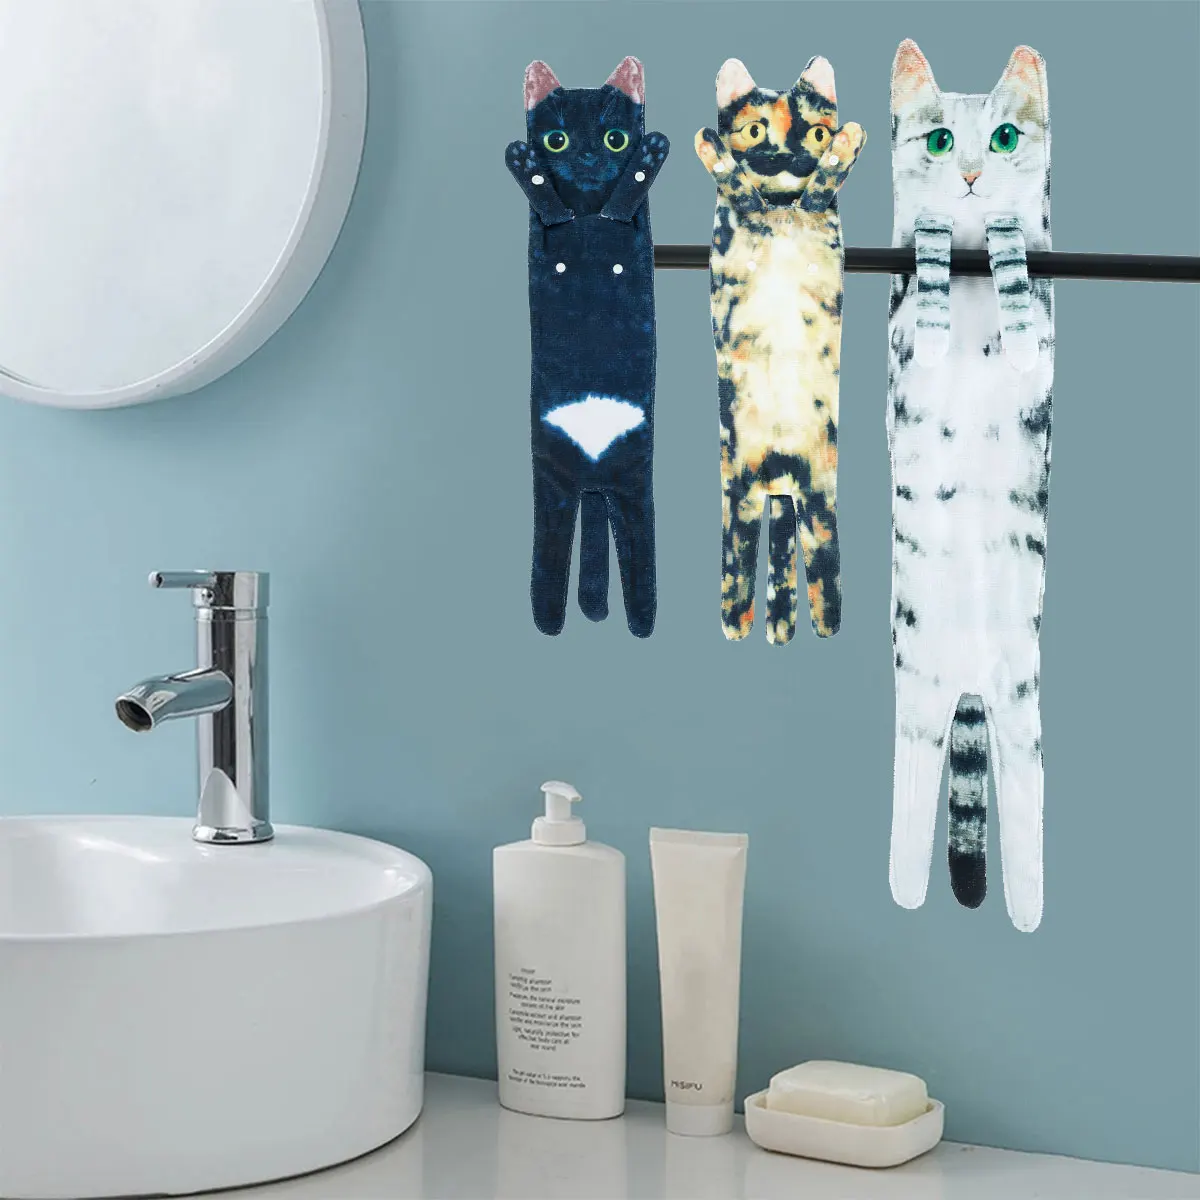 

39x13CM Cute Hanging Face Towels Super Fiber Soft Absorbent Towels Decorative Bathroom Kitchen Towels Cat Decor Gifts for Lovers